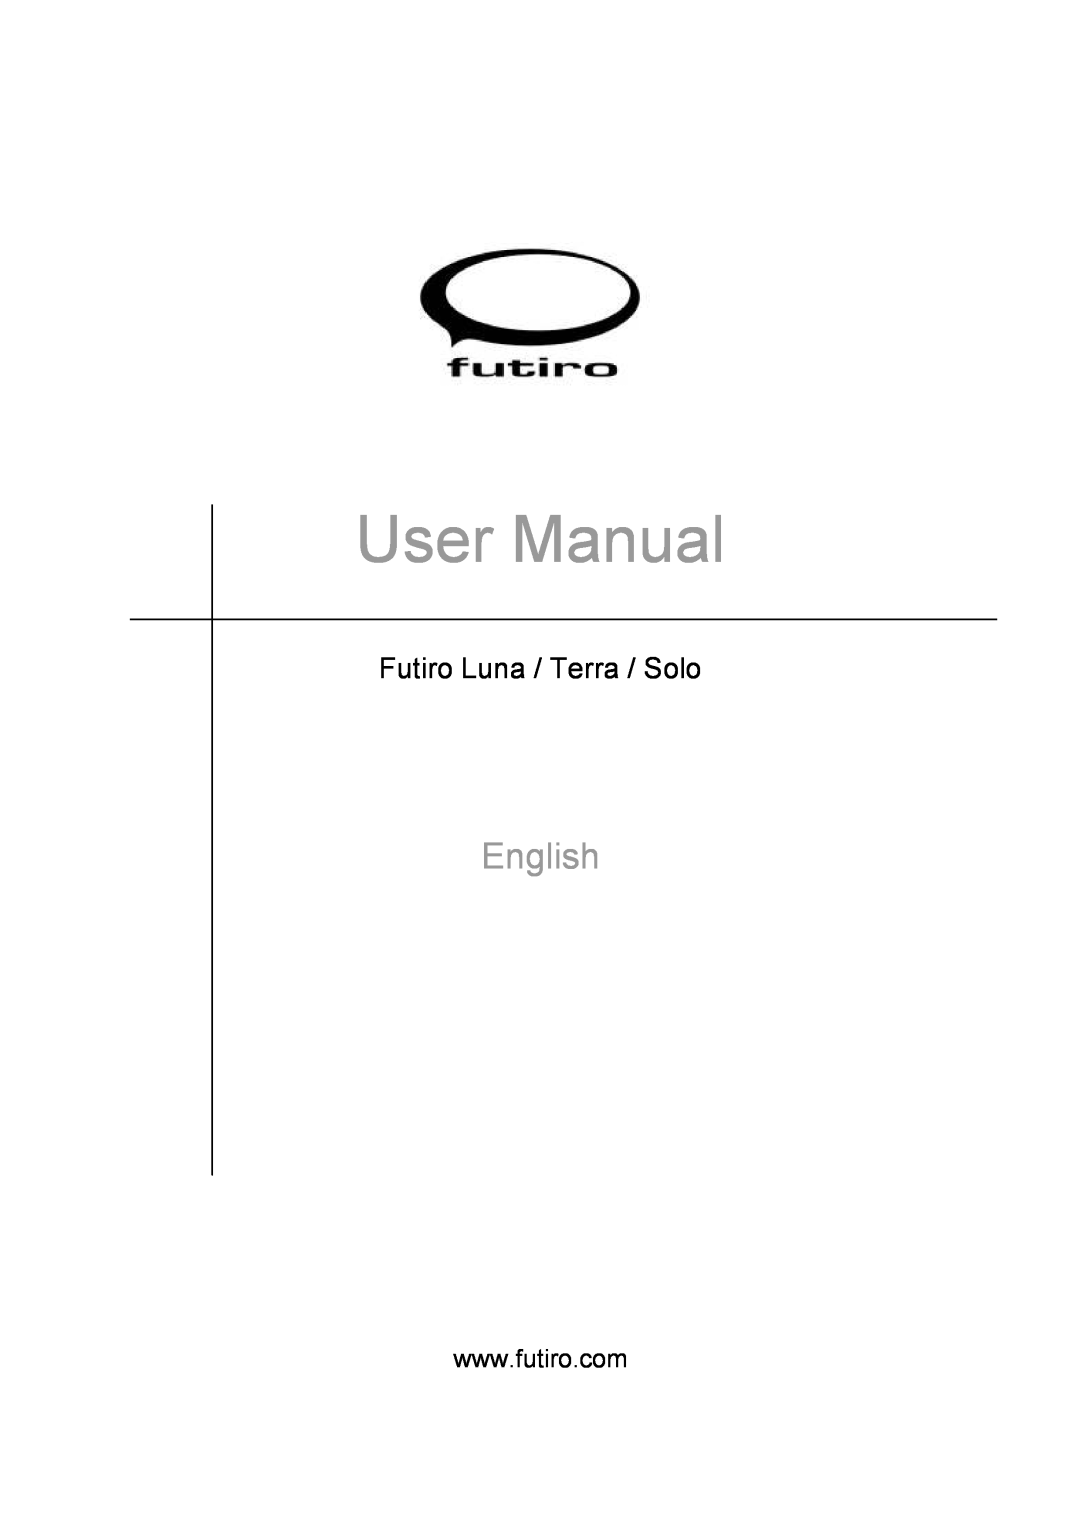 Futiro USB Phone manual Futiro Luna / Terra / Solo, User Manual, English 